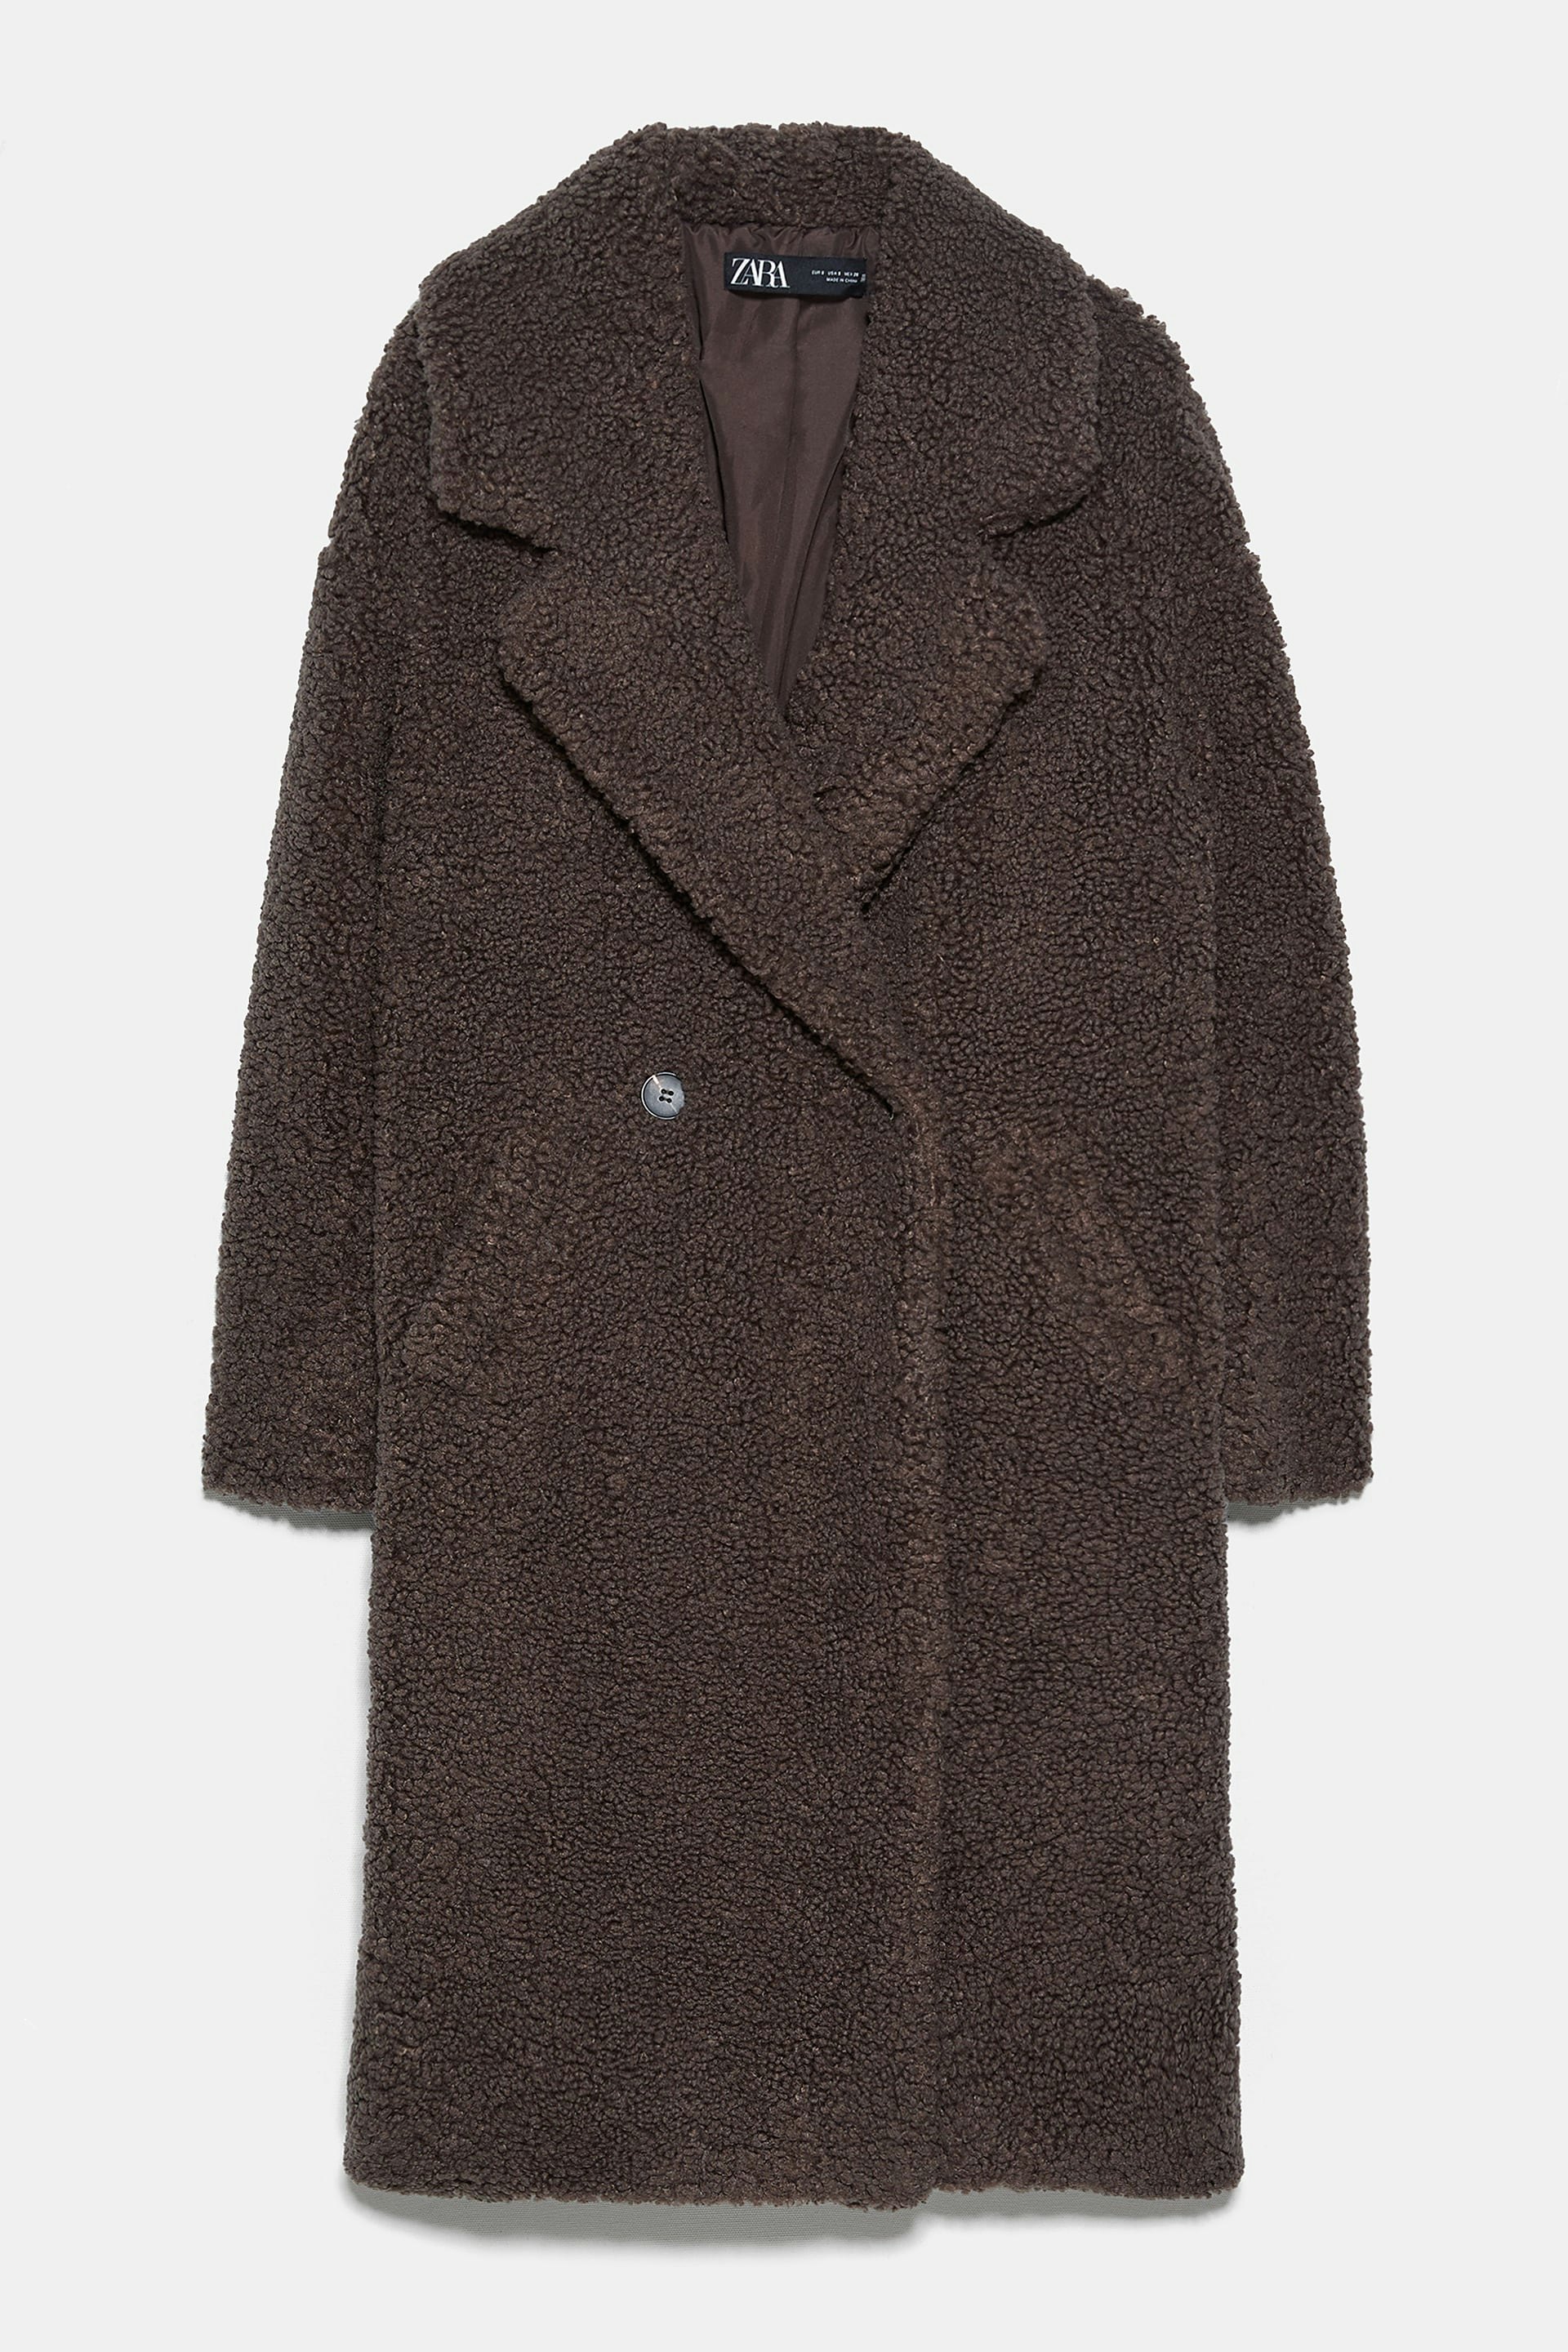 zara black winter coat